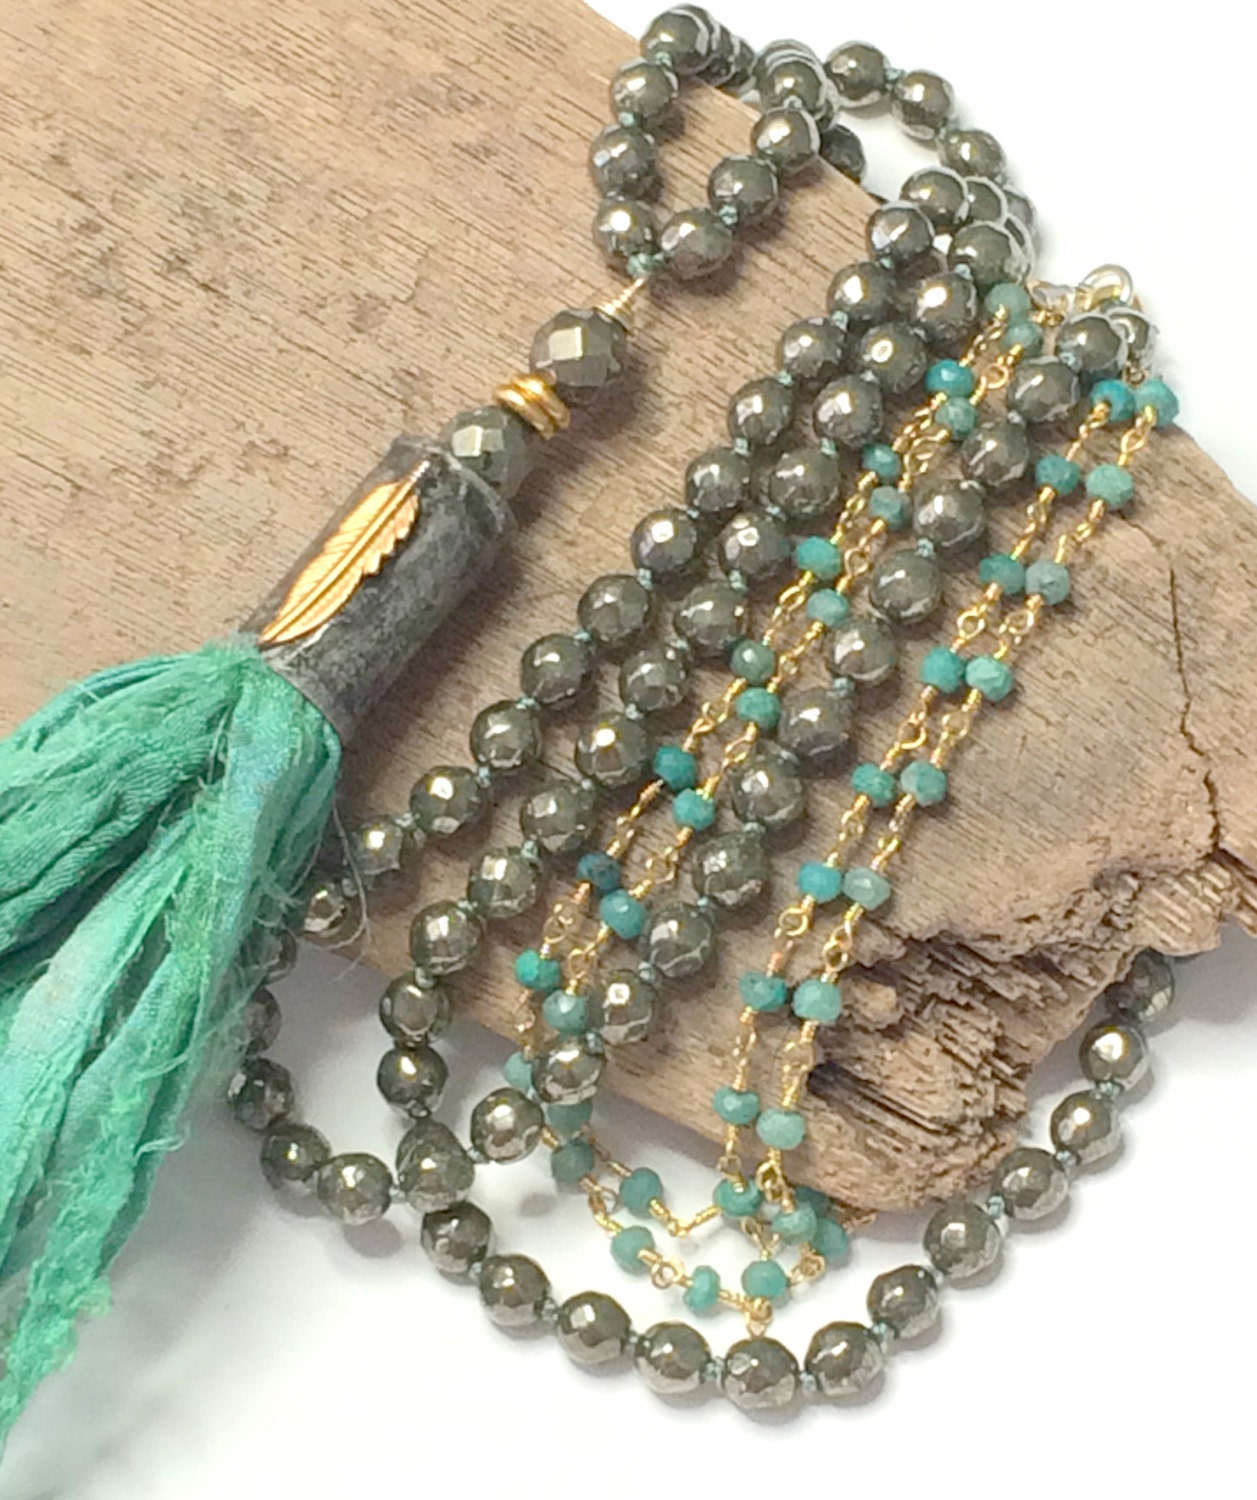 Boho Long Beaded Necklace Sari Silk Tassel by LoveandLulu on Etsy